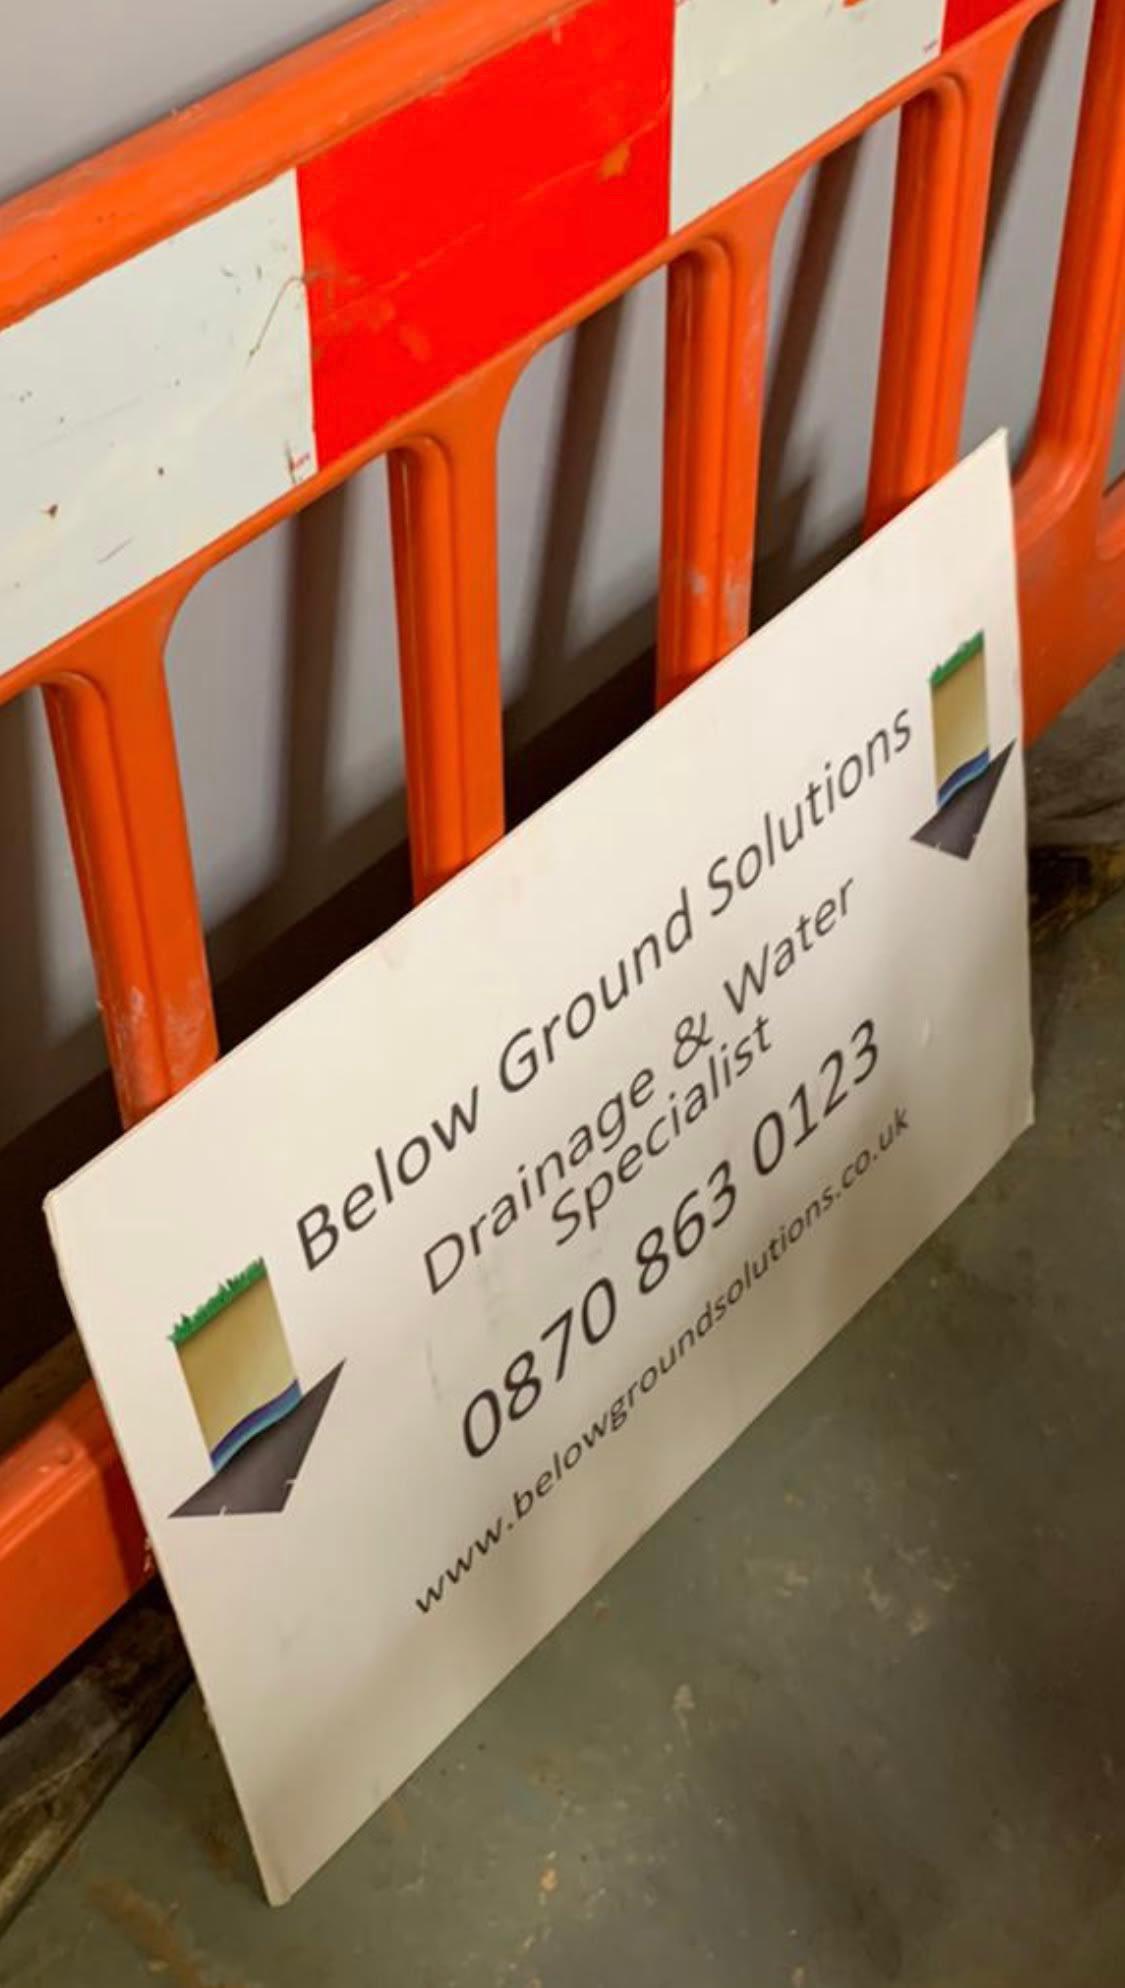 Images Below Ground Solutions Ltd.